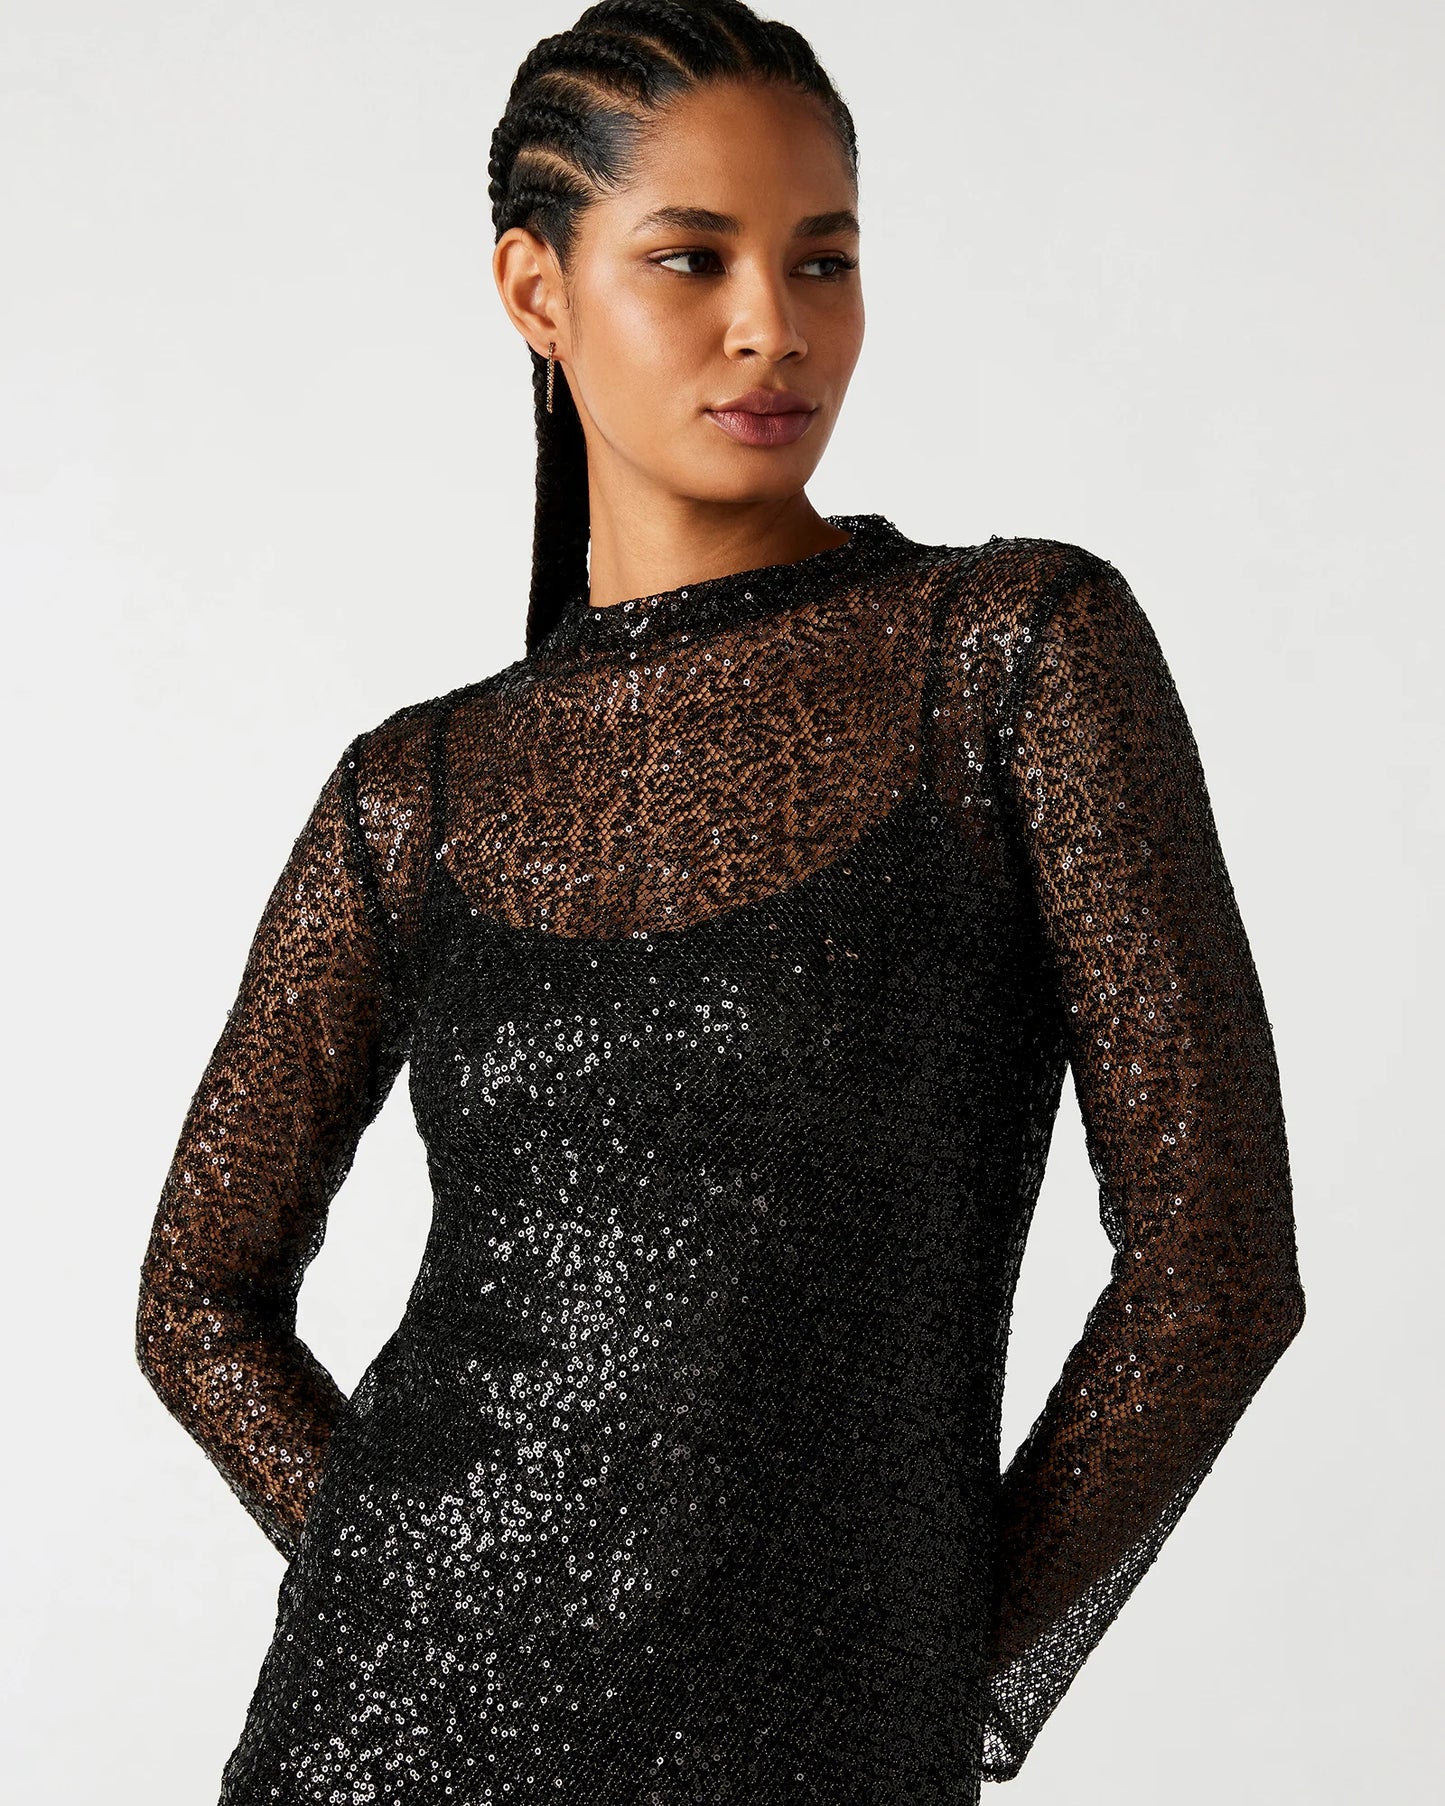 Blakely Dress-Black - FINAL SALE